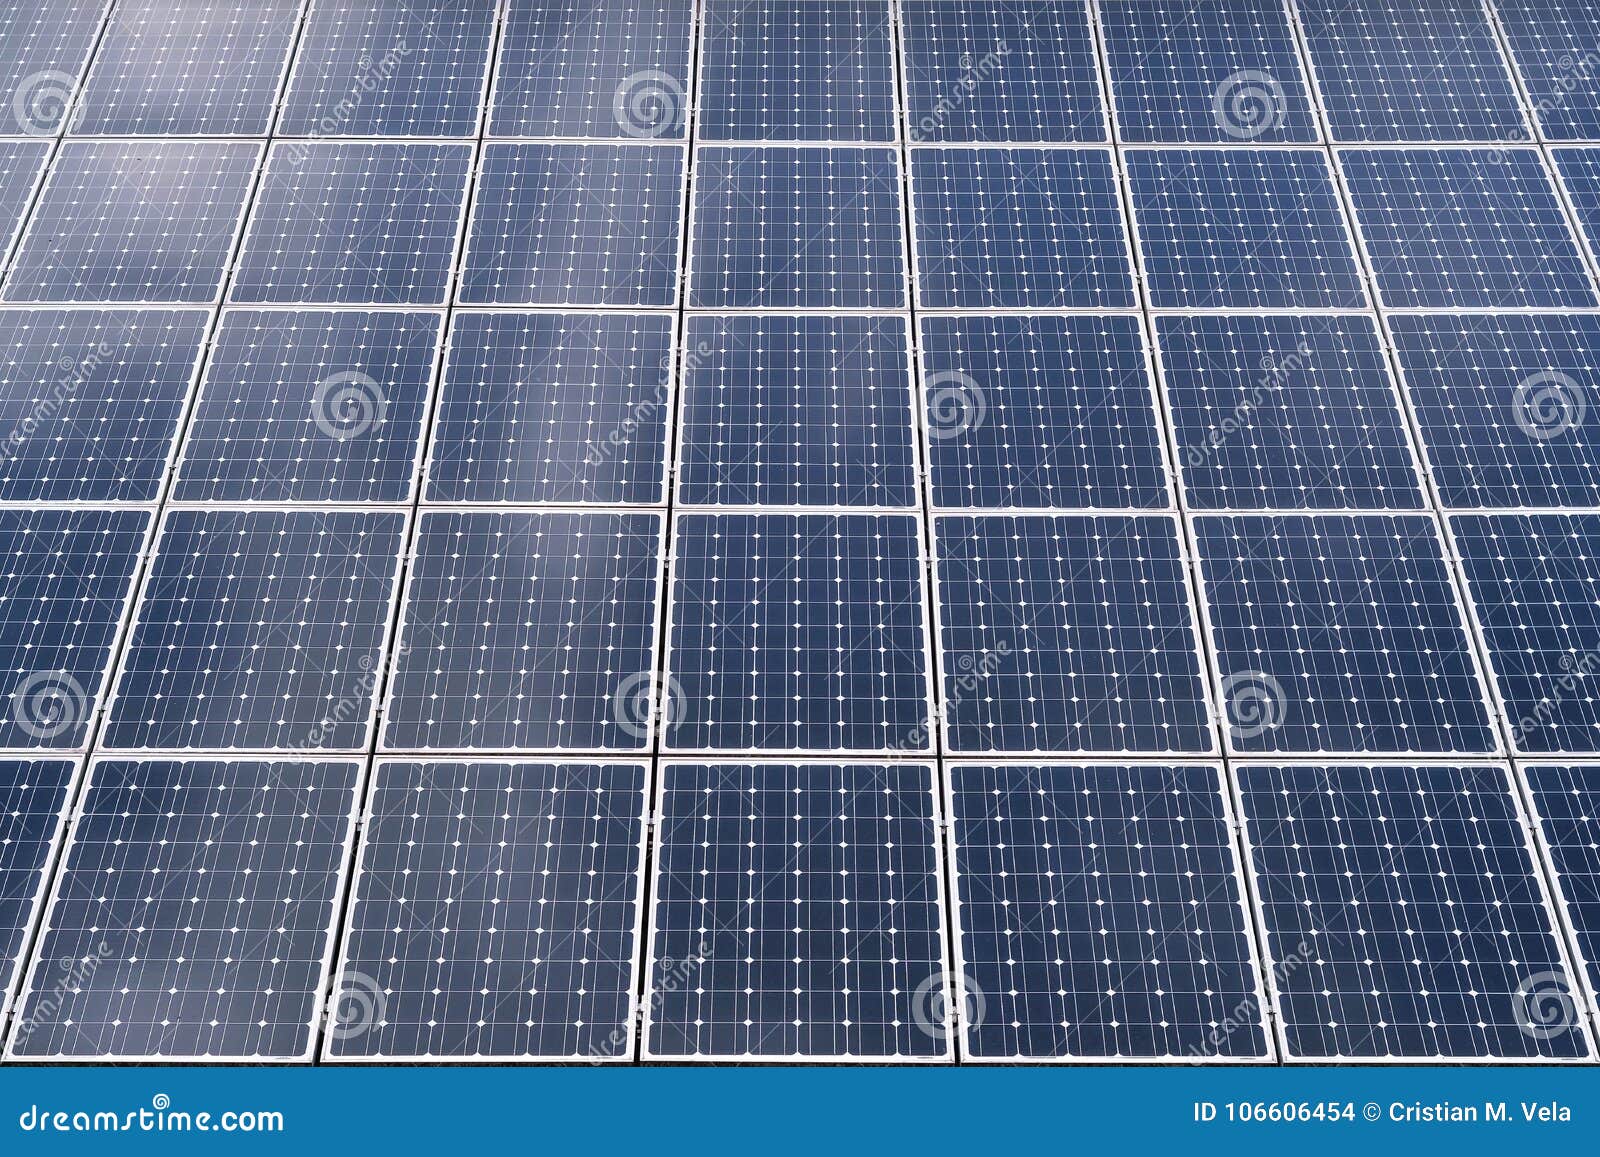 photo voltaic solar panels baclground